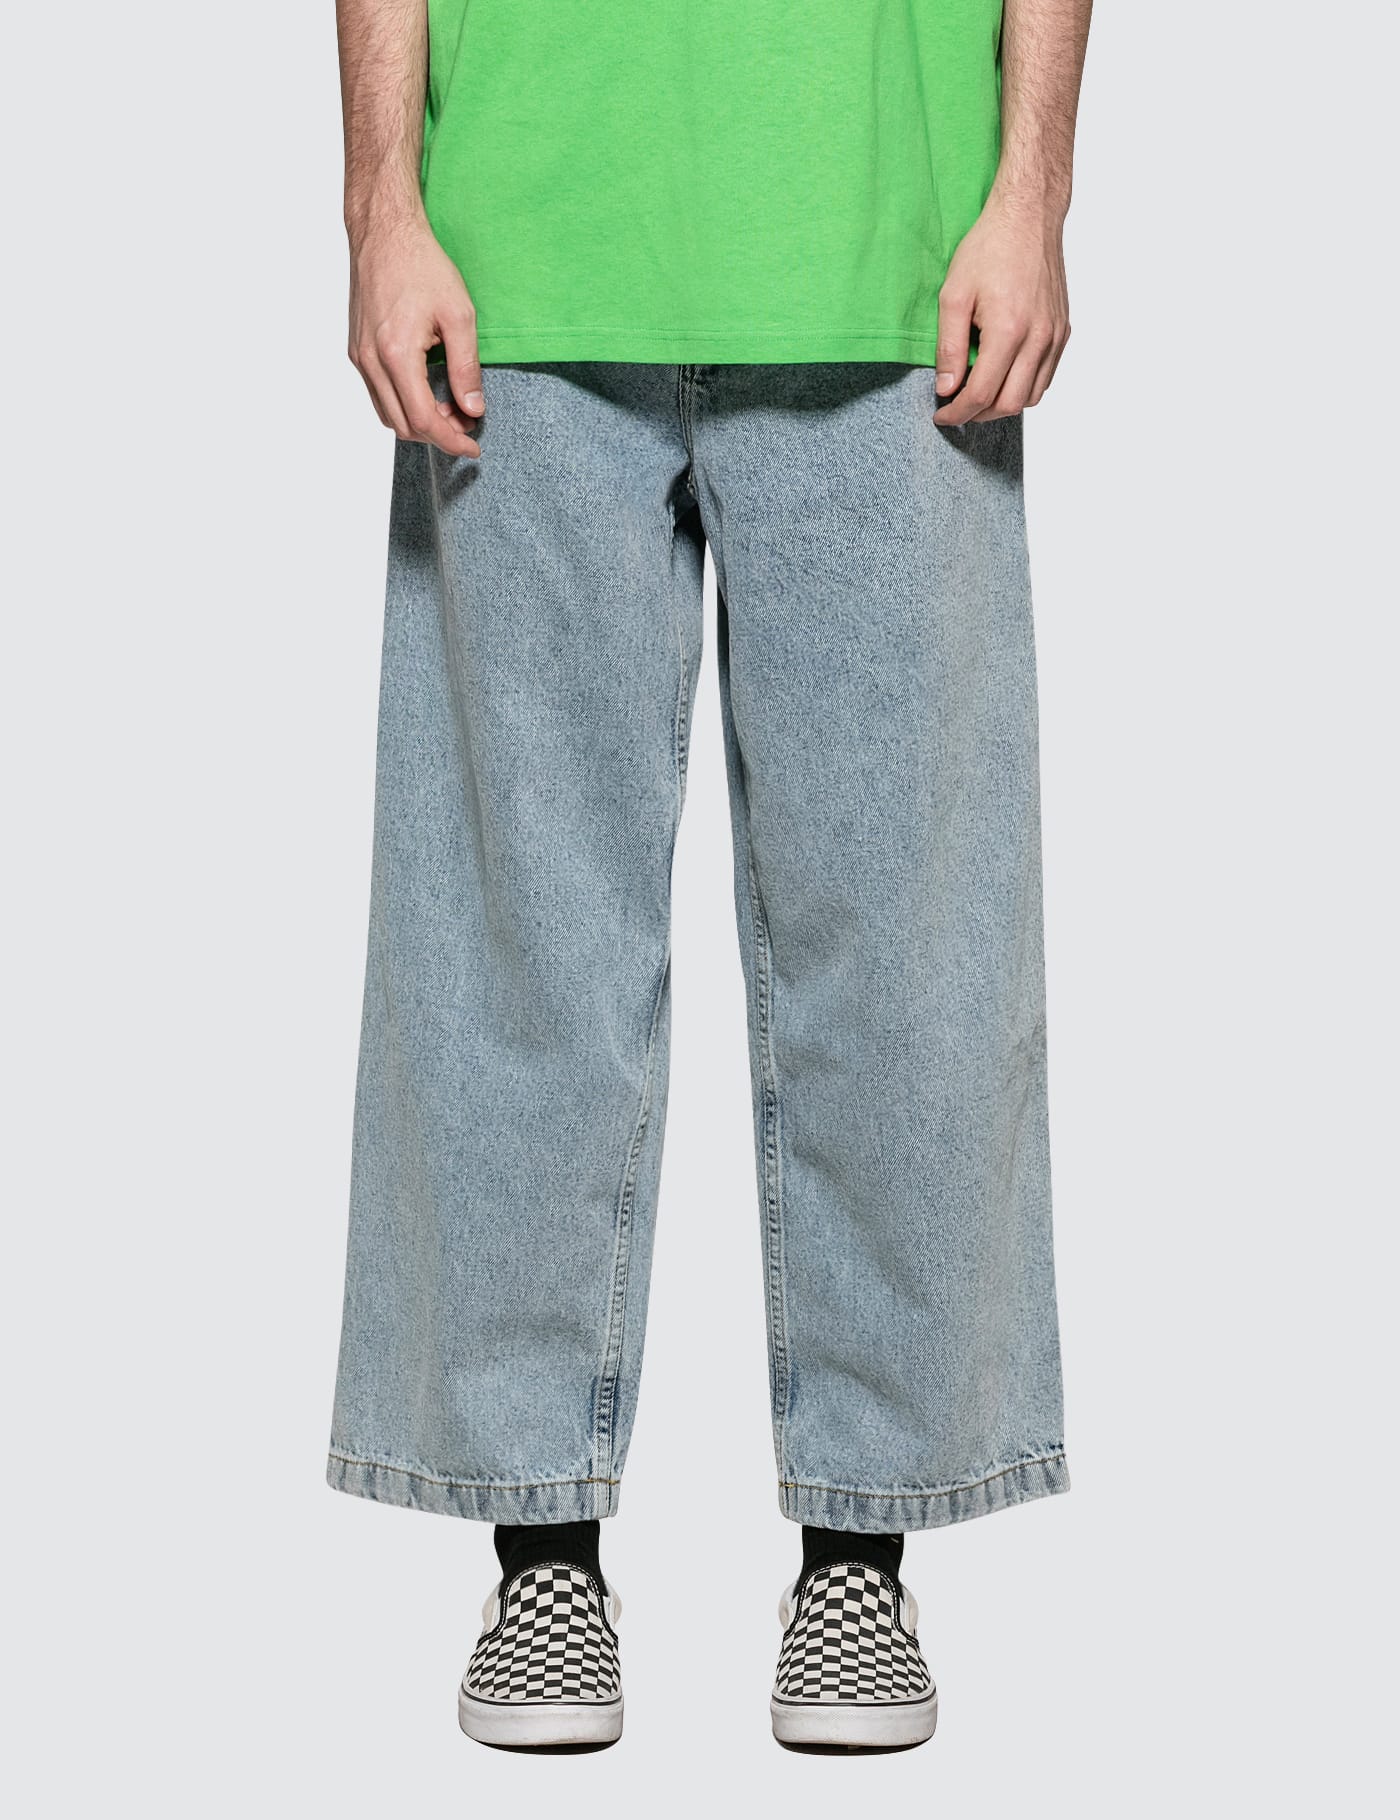 Polar Skate Co. - Big Boy Jeans | HBX - HYPEBEAST 為您搜羅全球潮流 